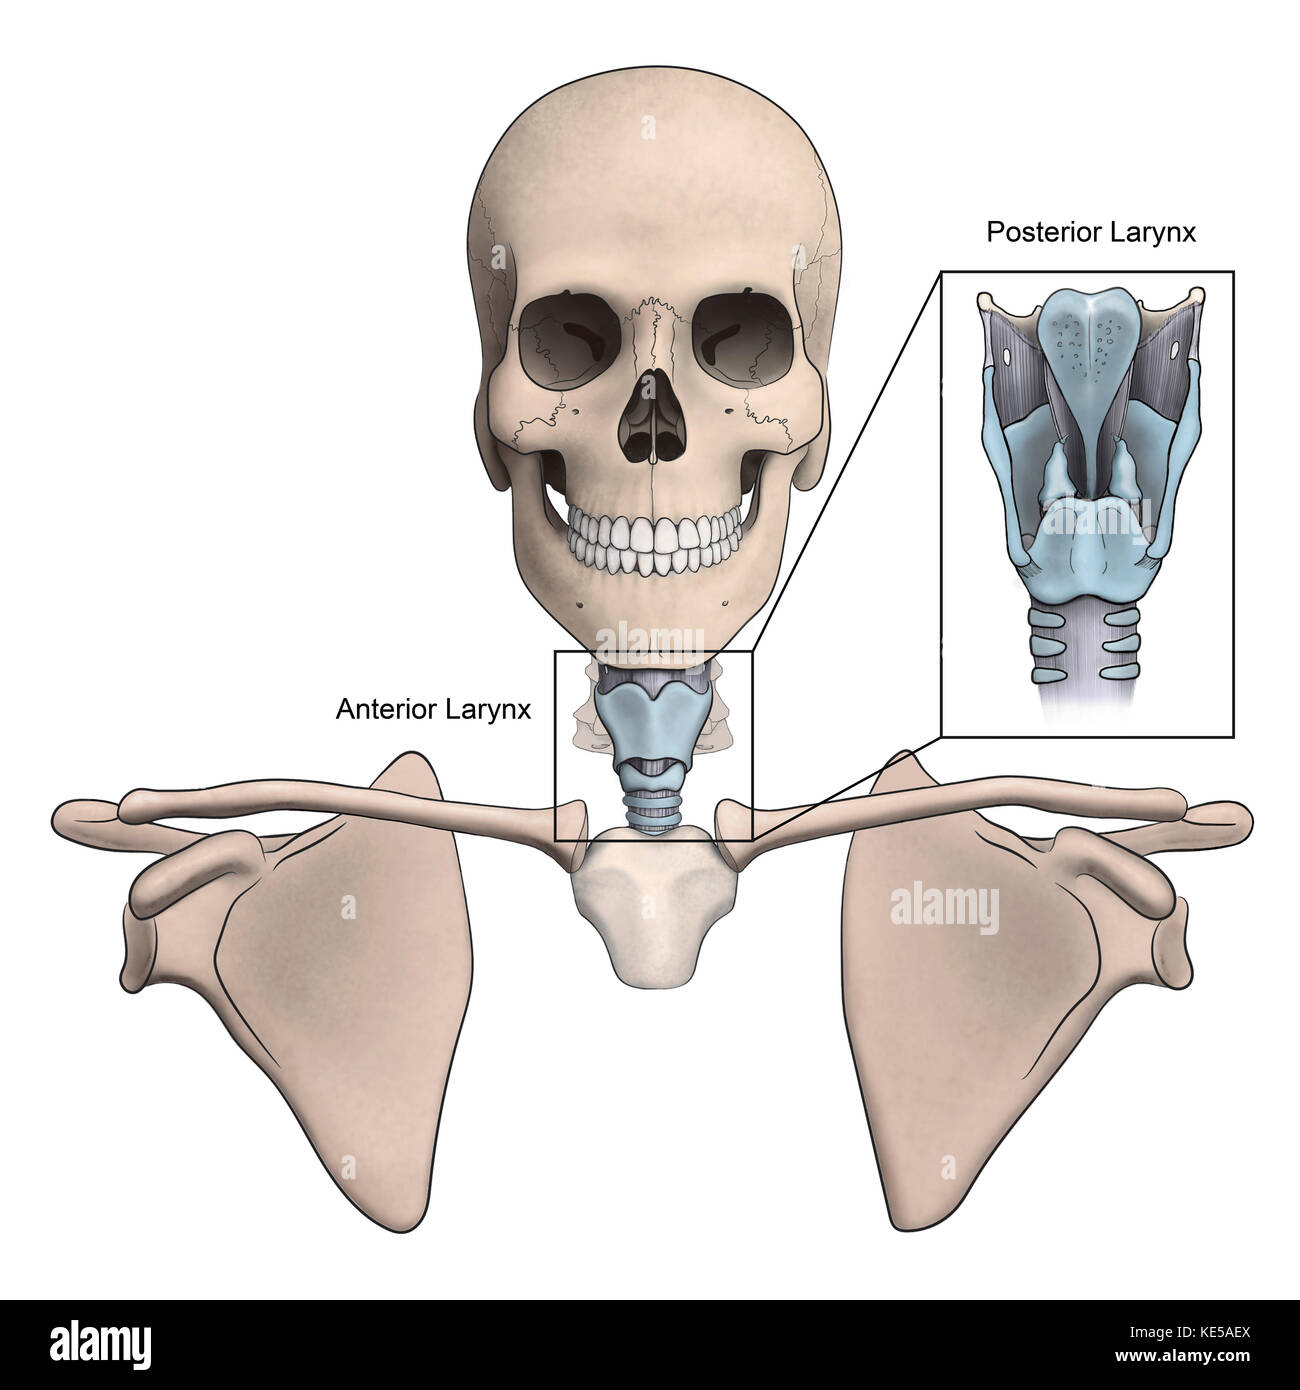 Anterior and posterior larynx and skeletal anatomy. Stock Photo